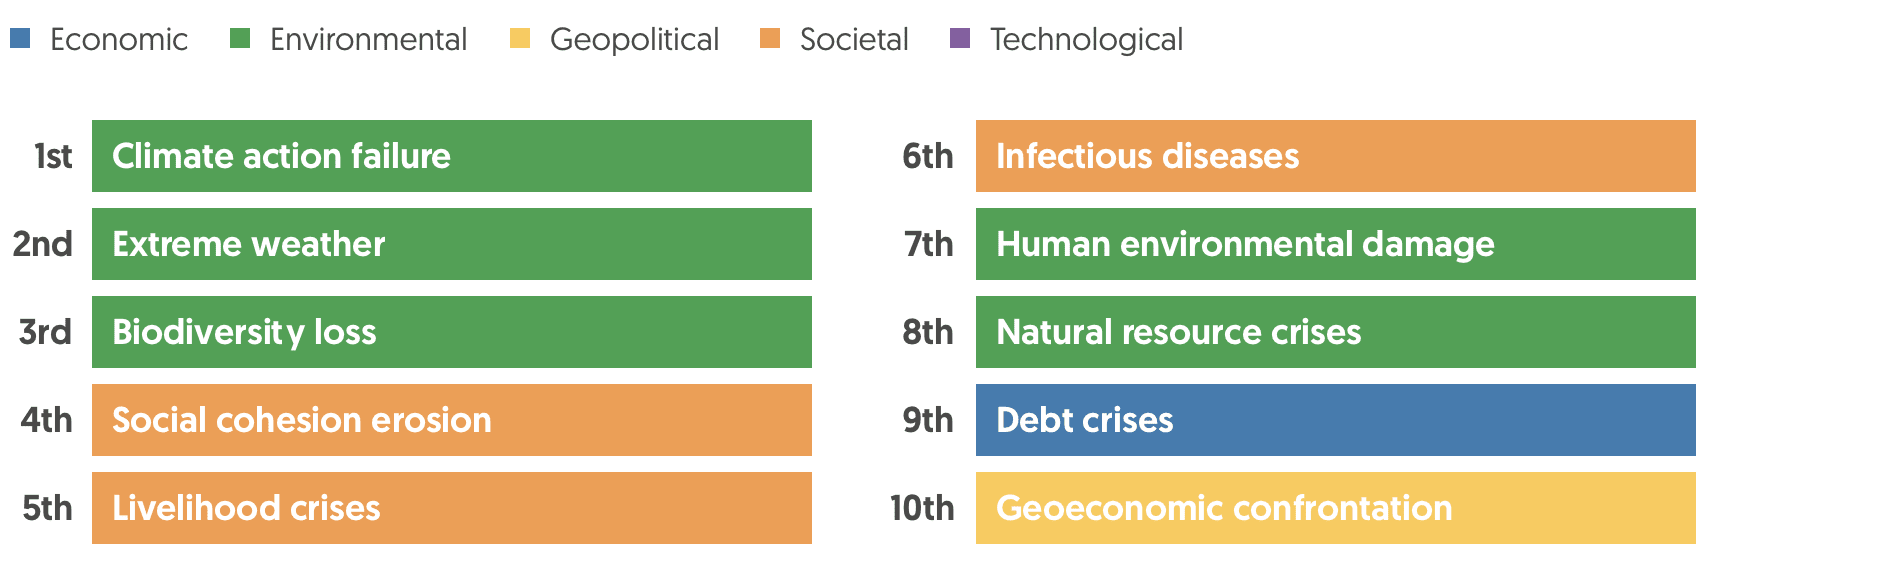 Top 10 ESG Risks